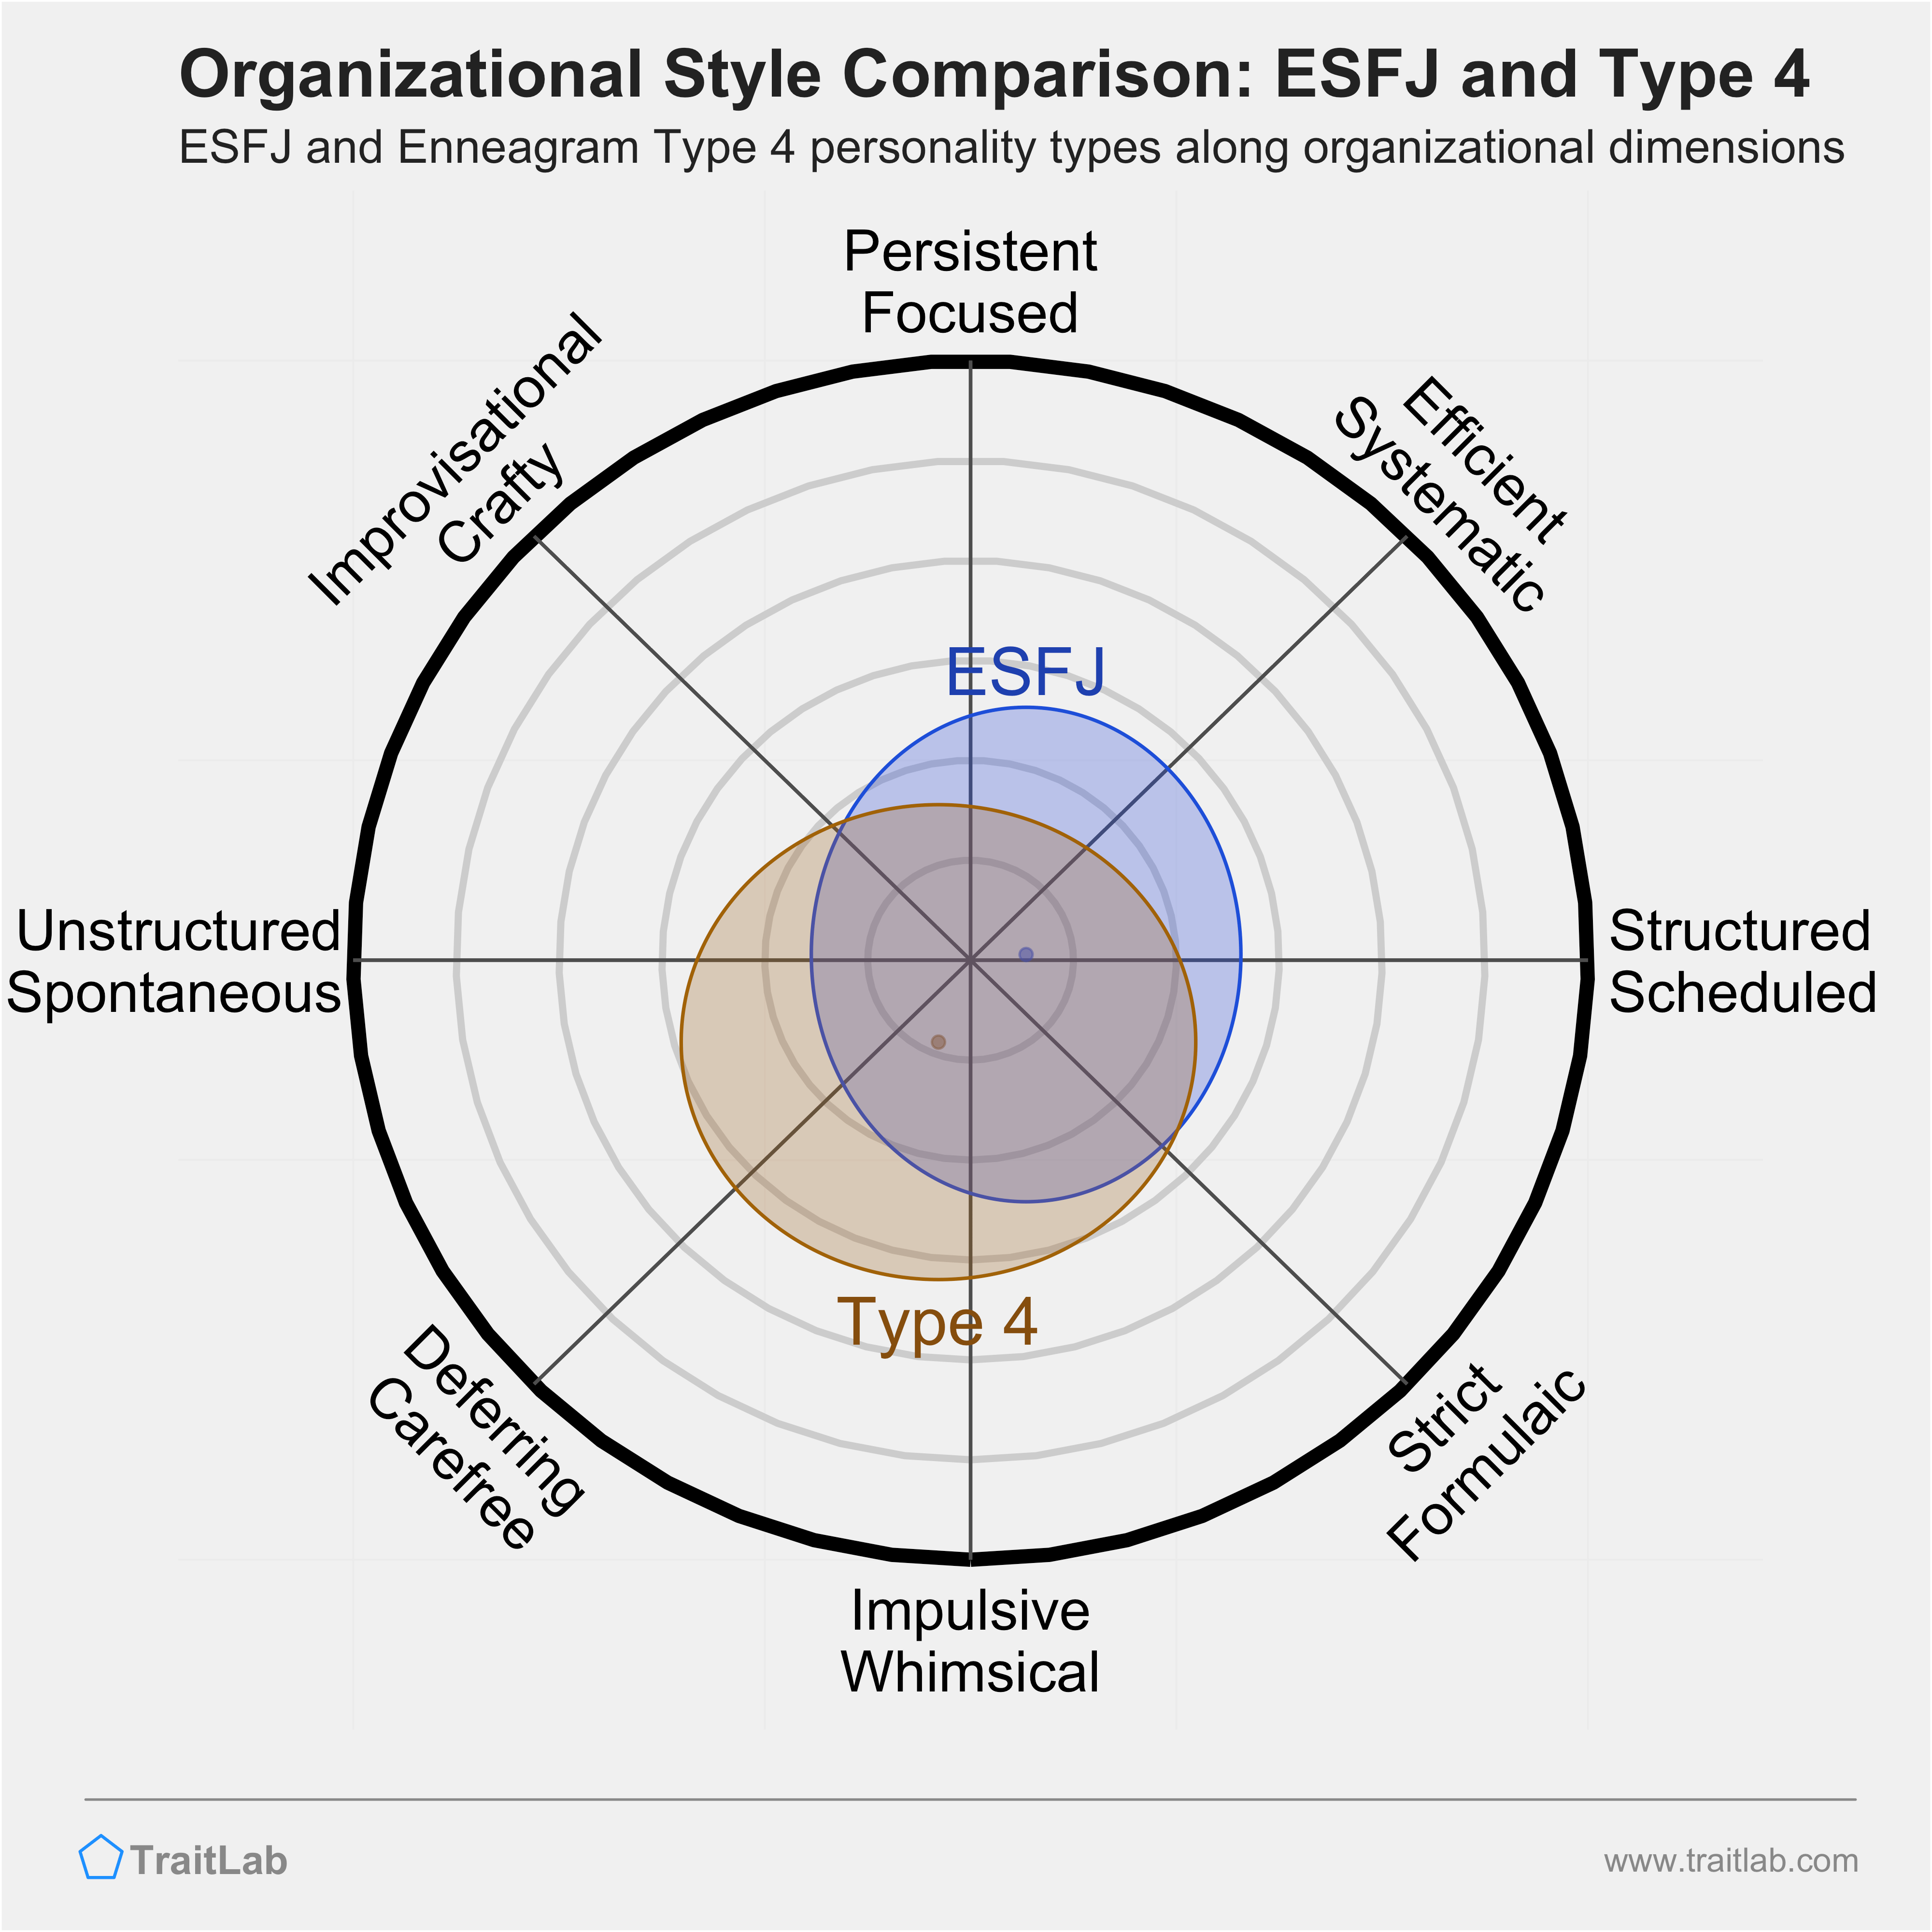 ESFJ and Type 4 comparison across organizational dimensions